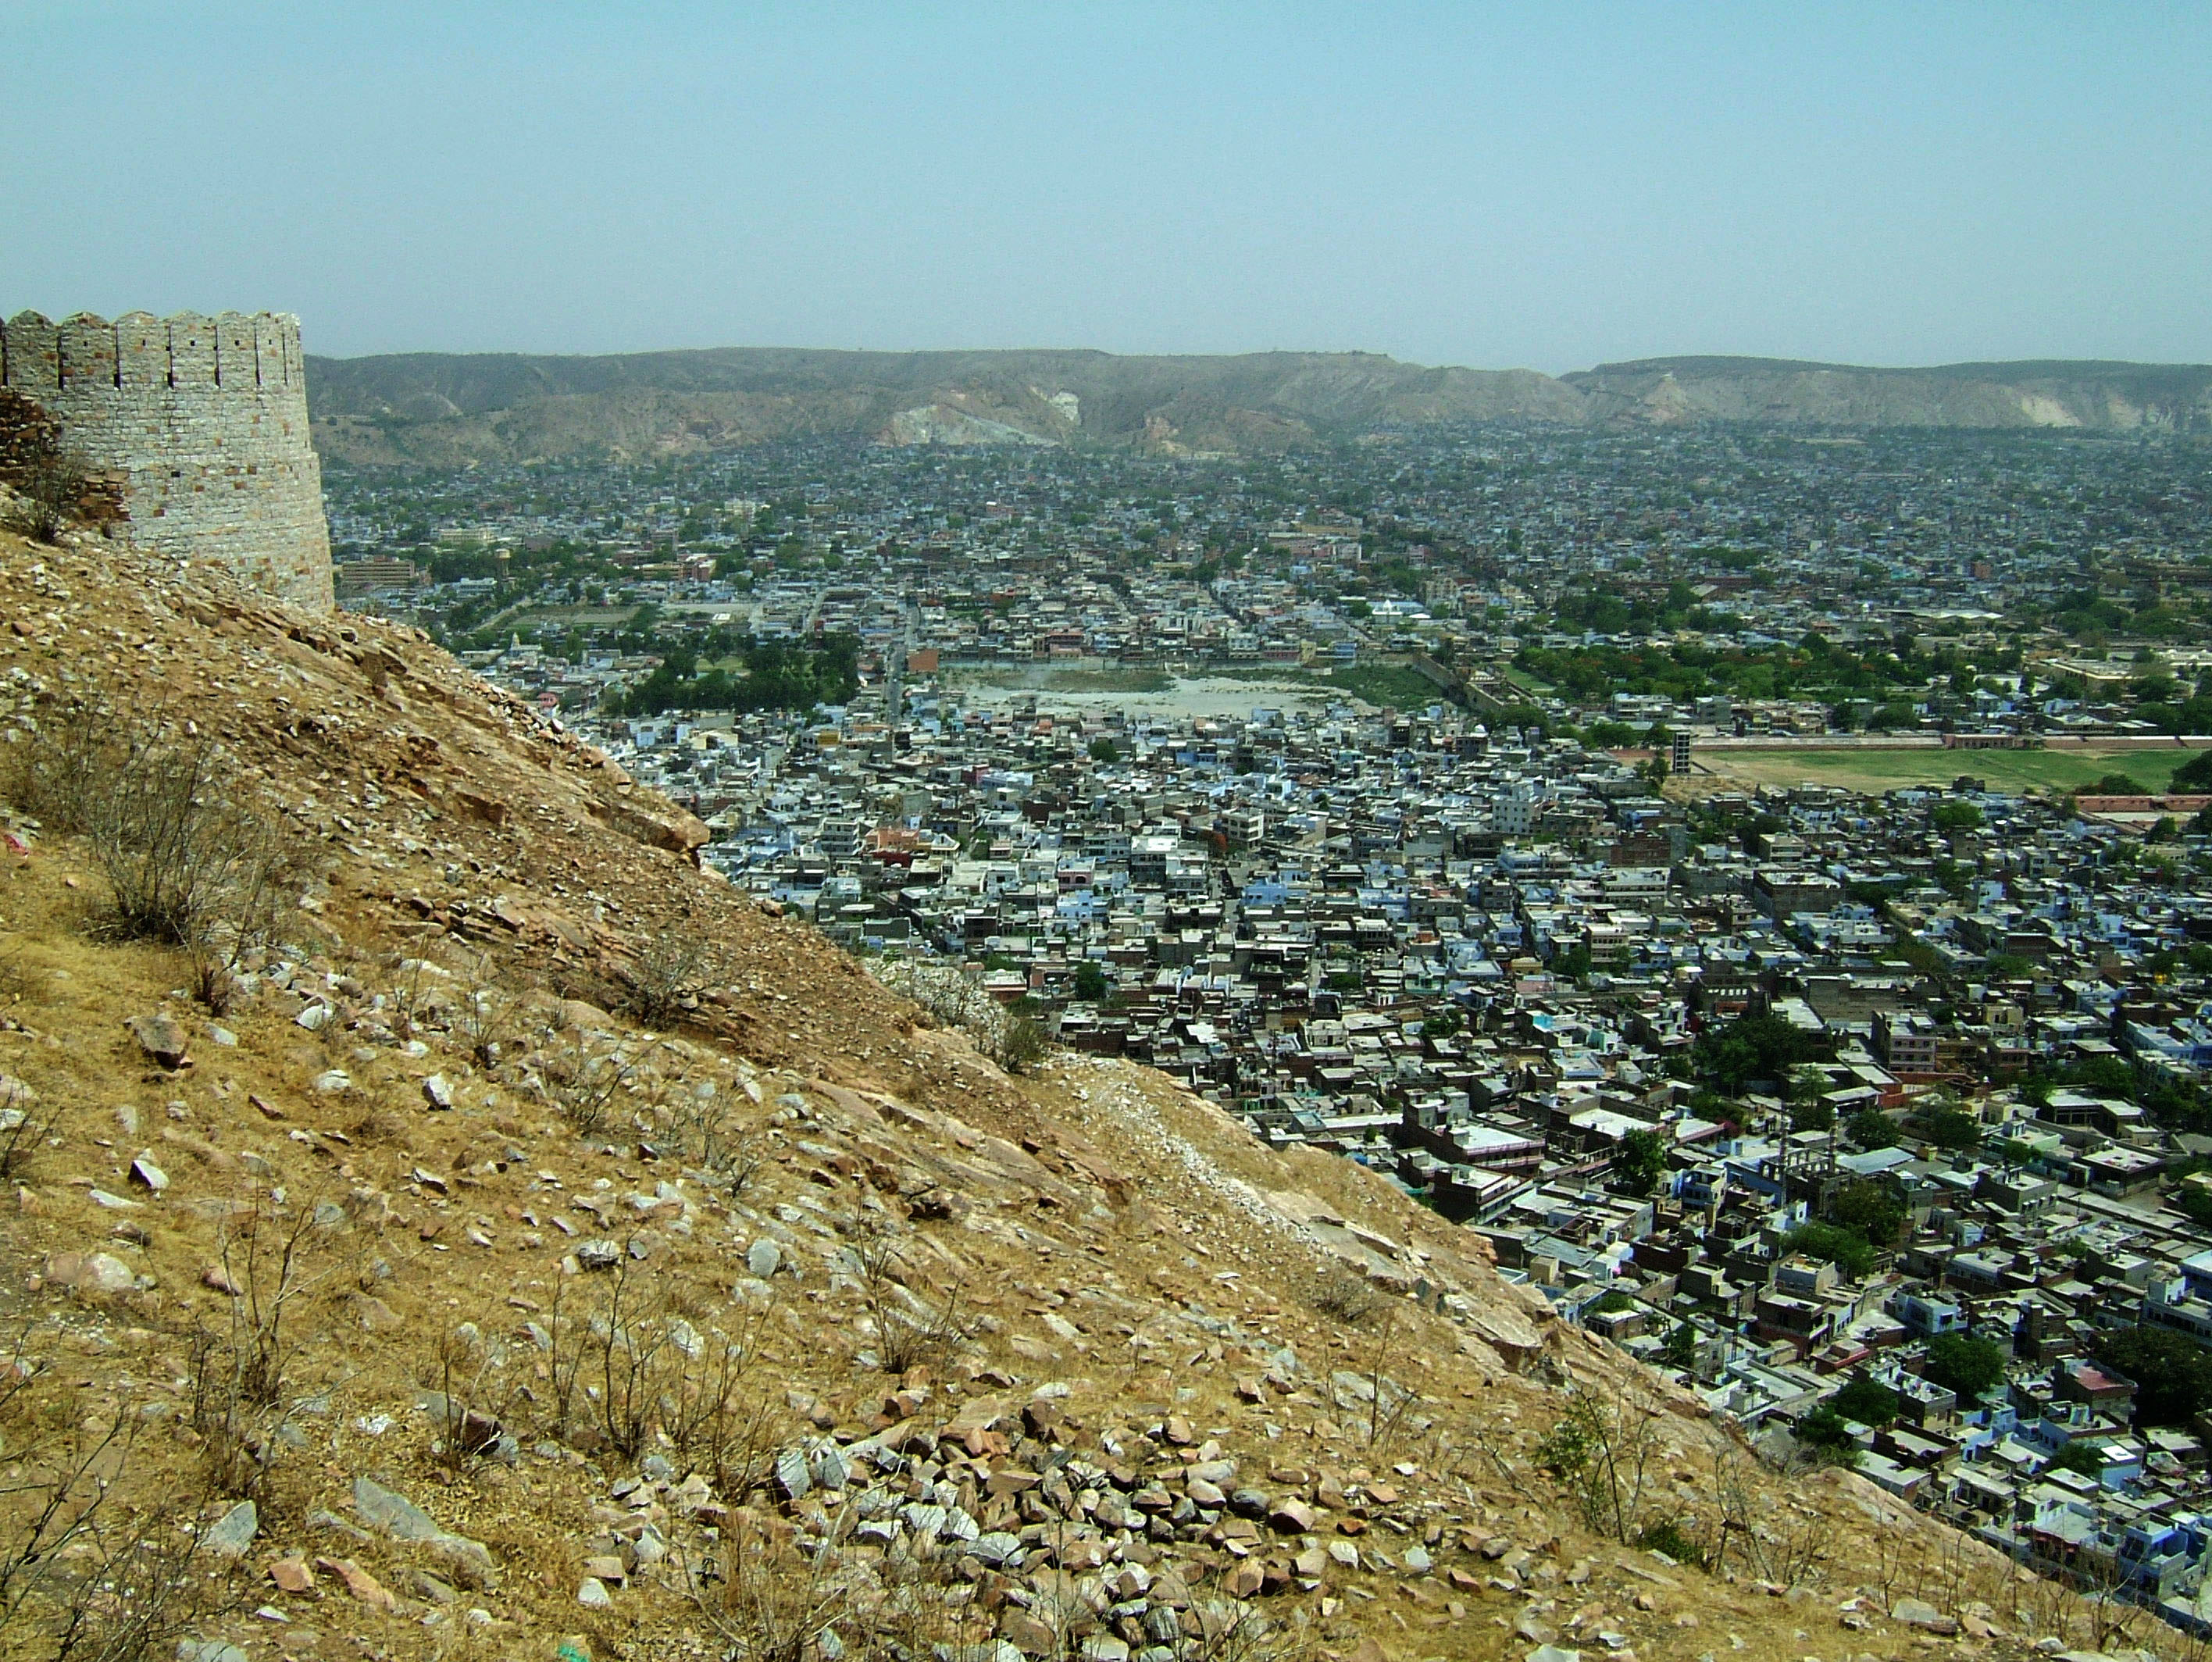 Nahargarh Fort Aravalli Hills overlooking city of Jaipur India Apr 2004 09